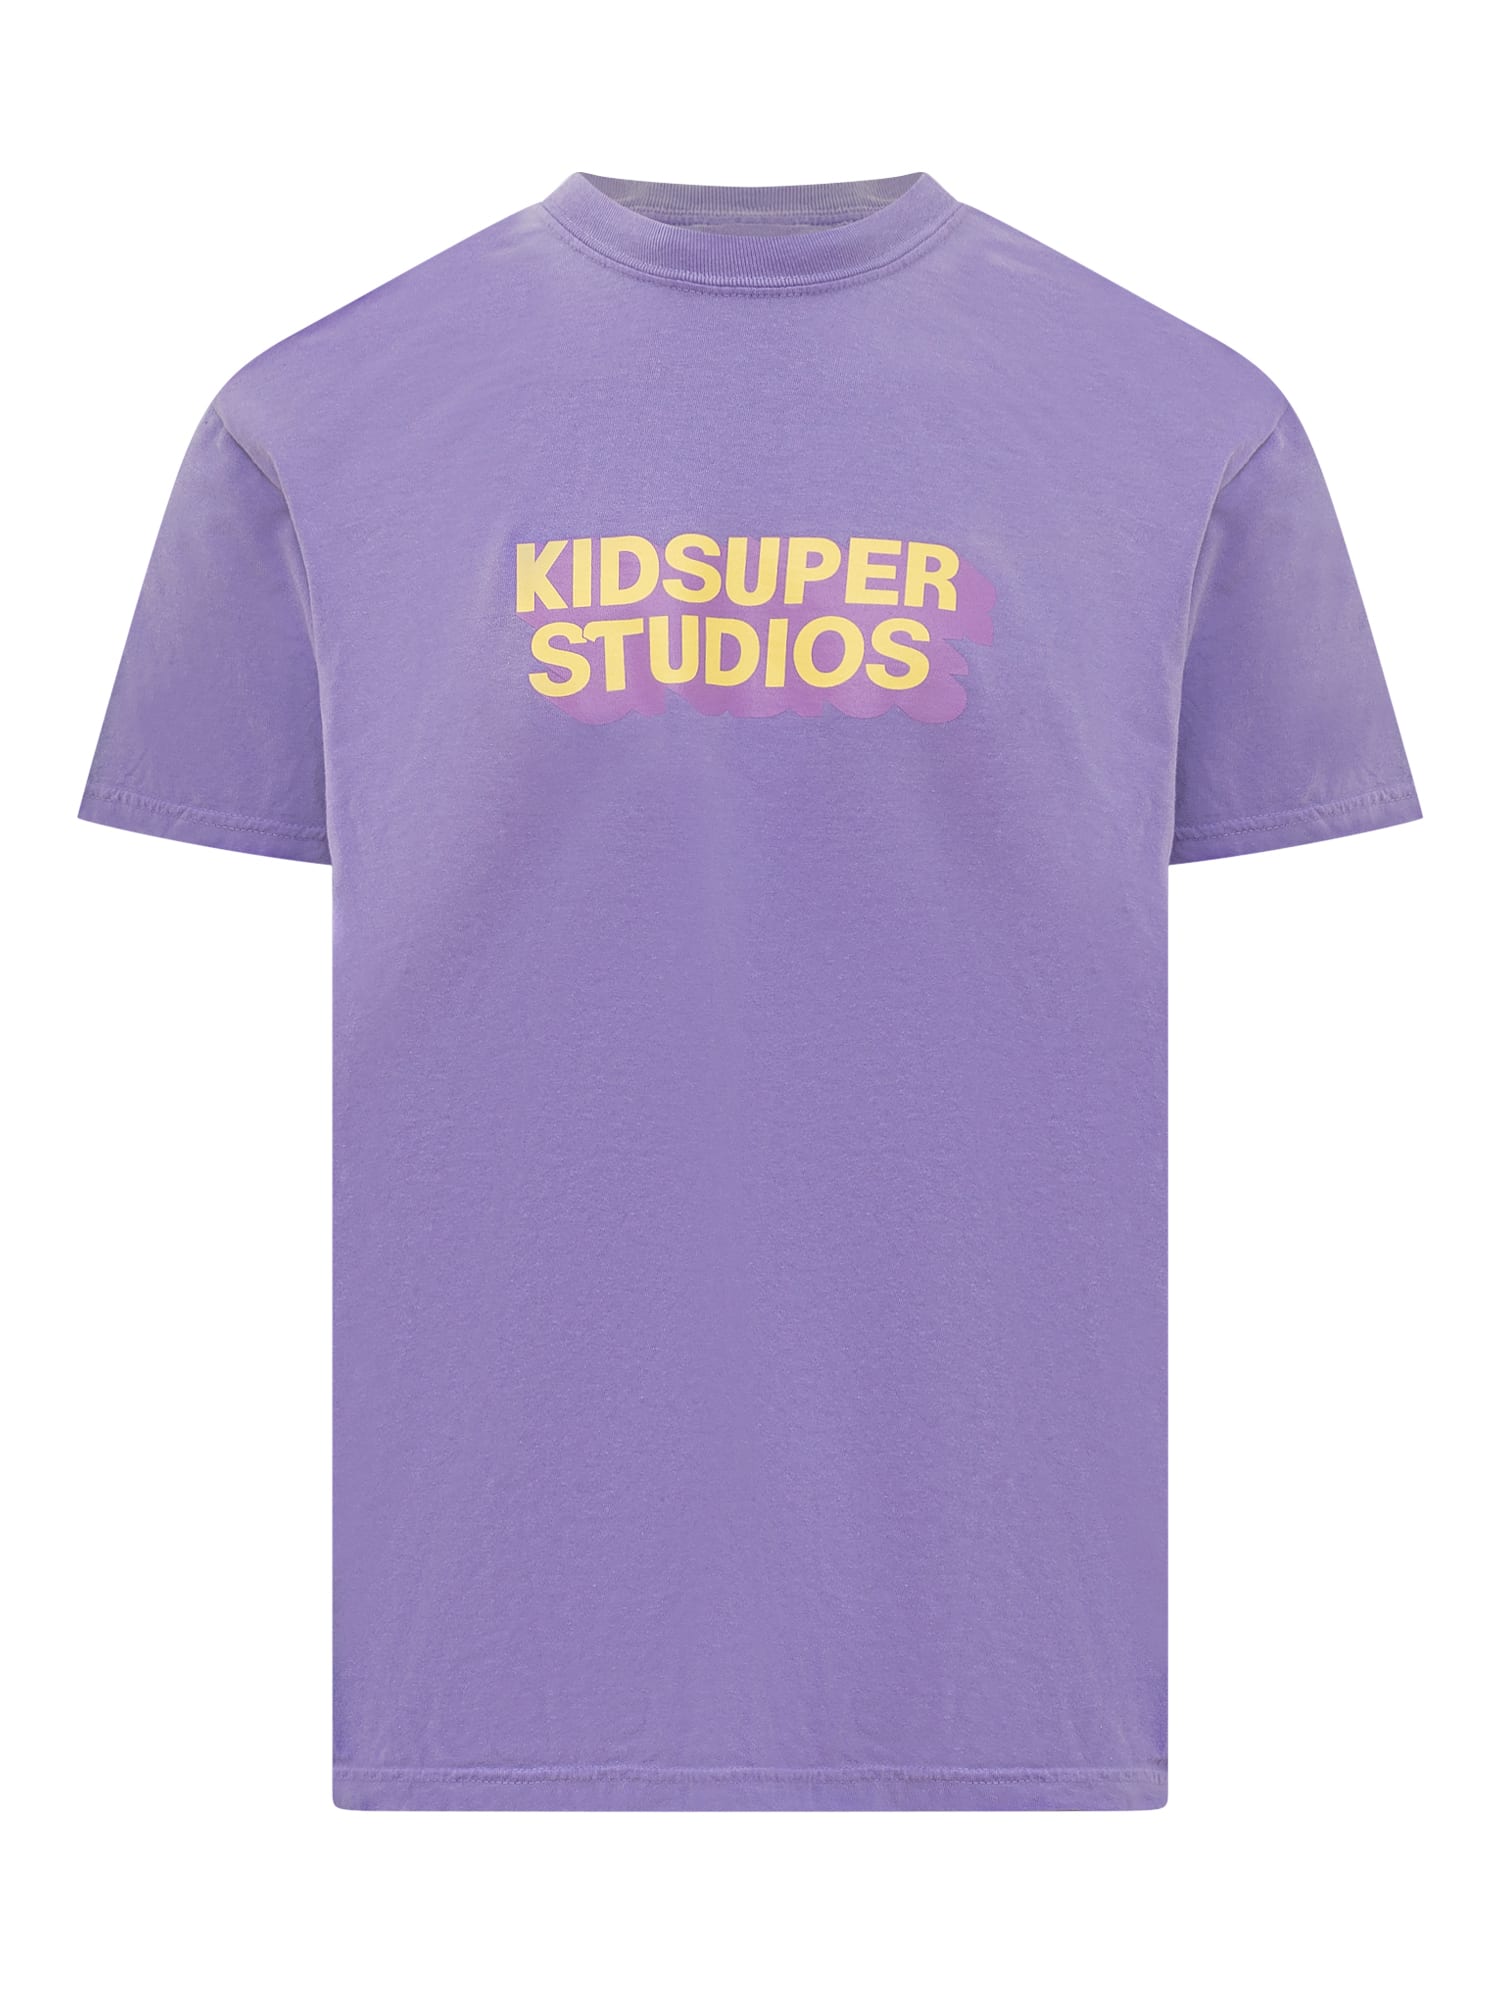 KIDSUPER STUDIOS T-SHIRT